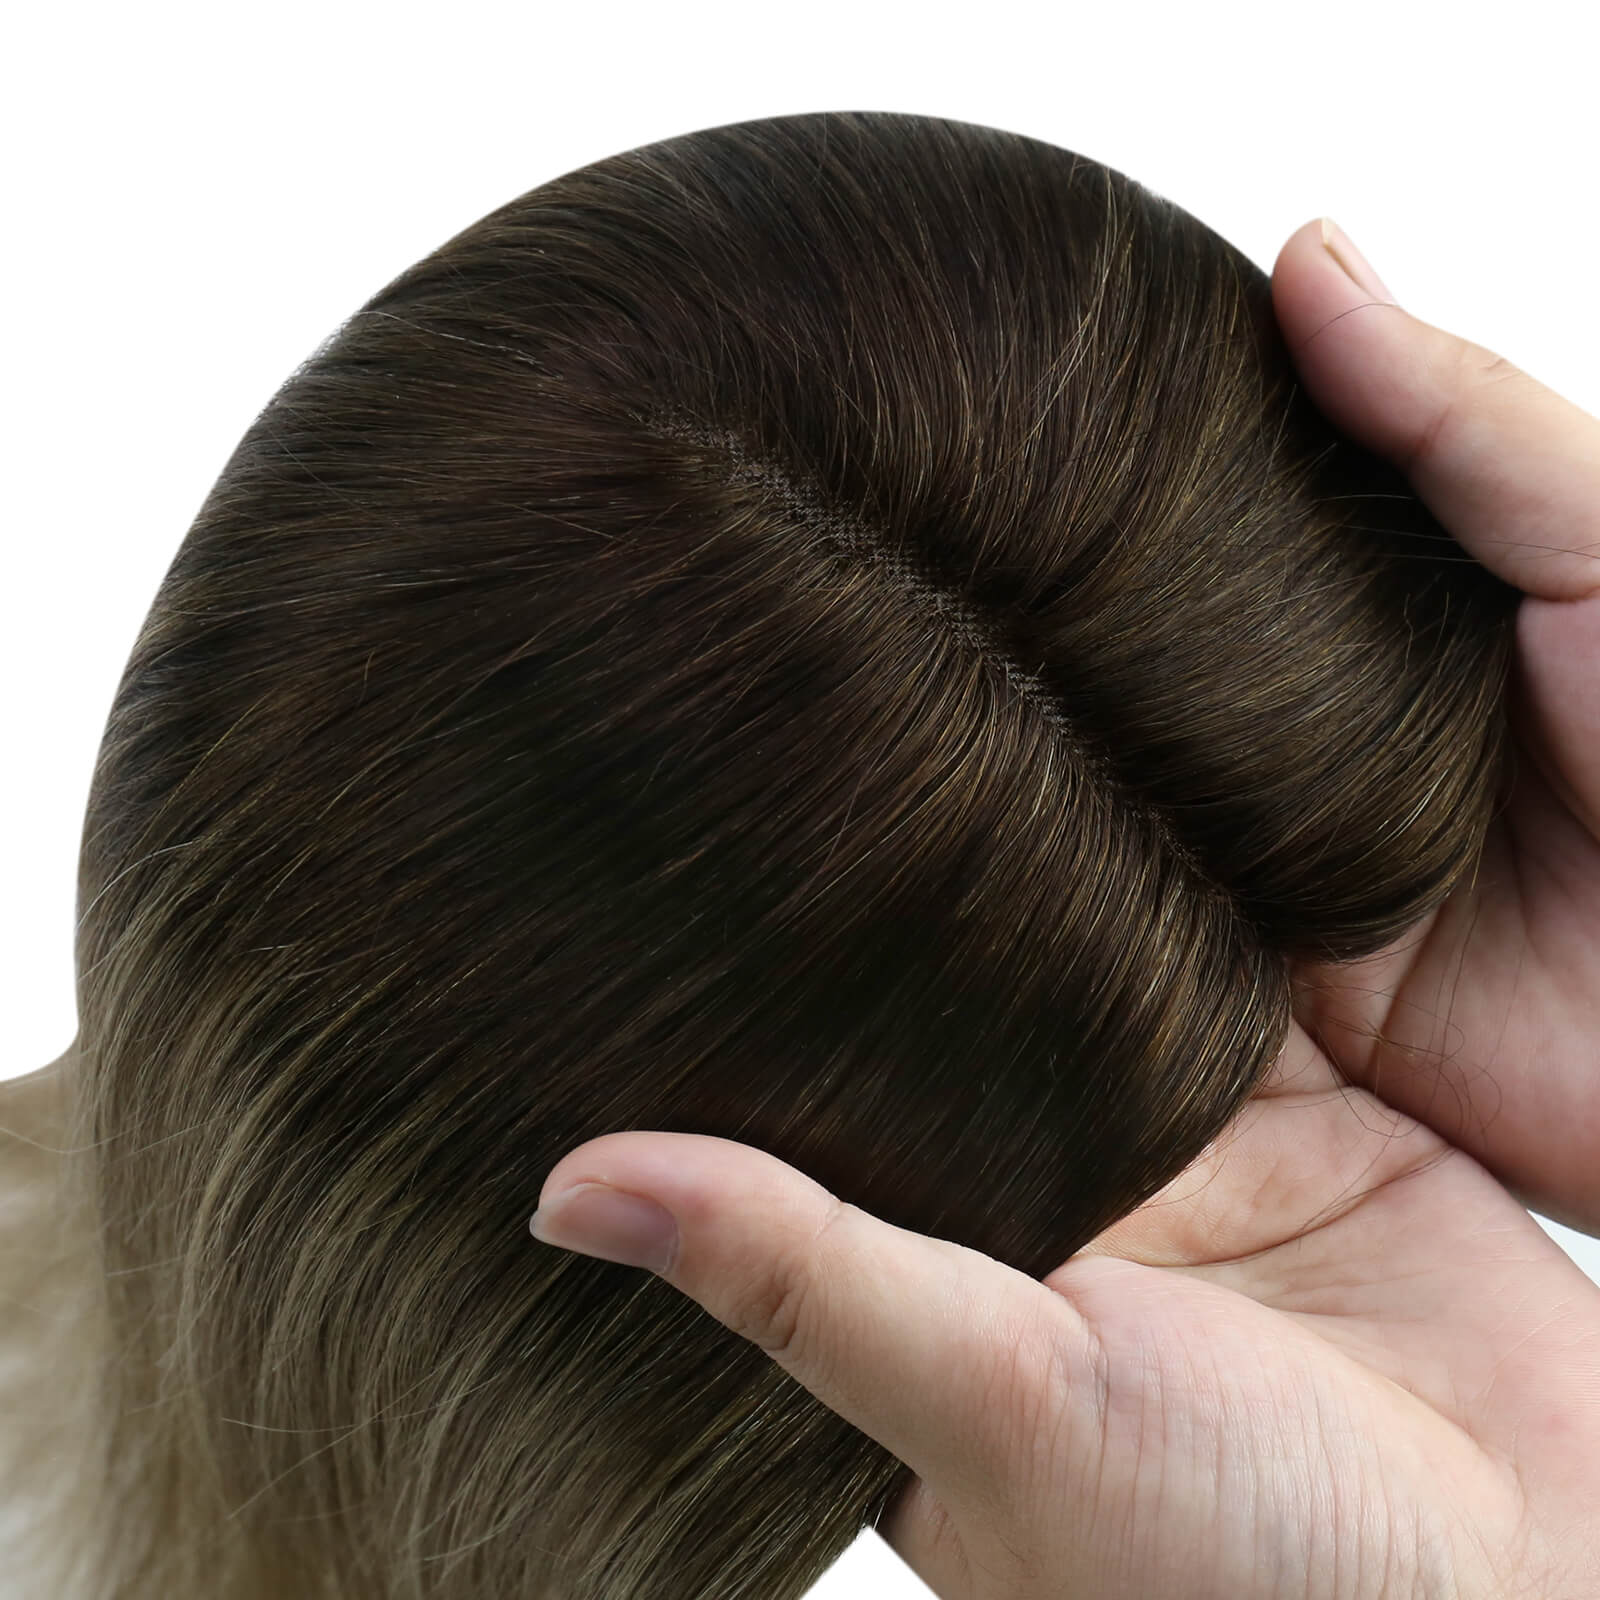 100% high quality human hair topper for thinning hair